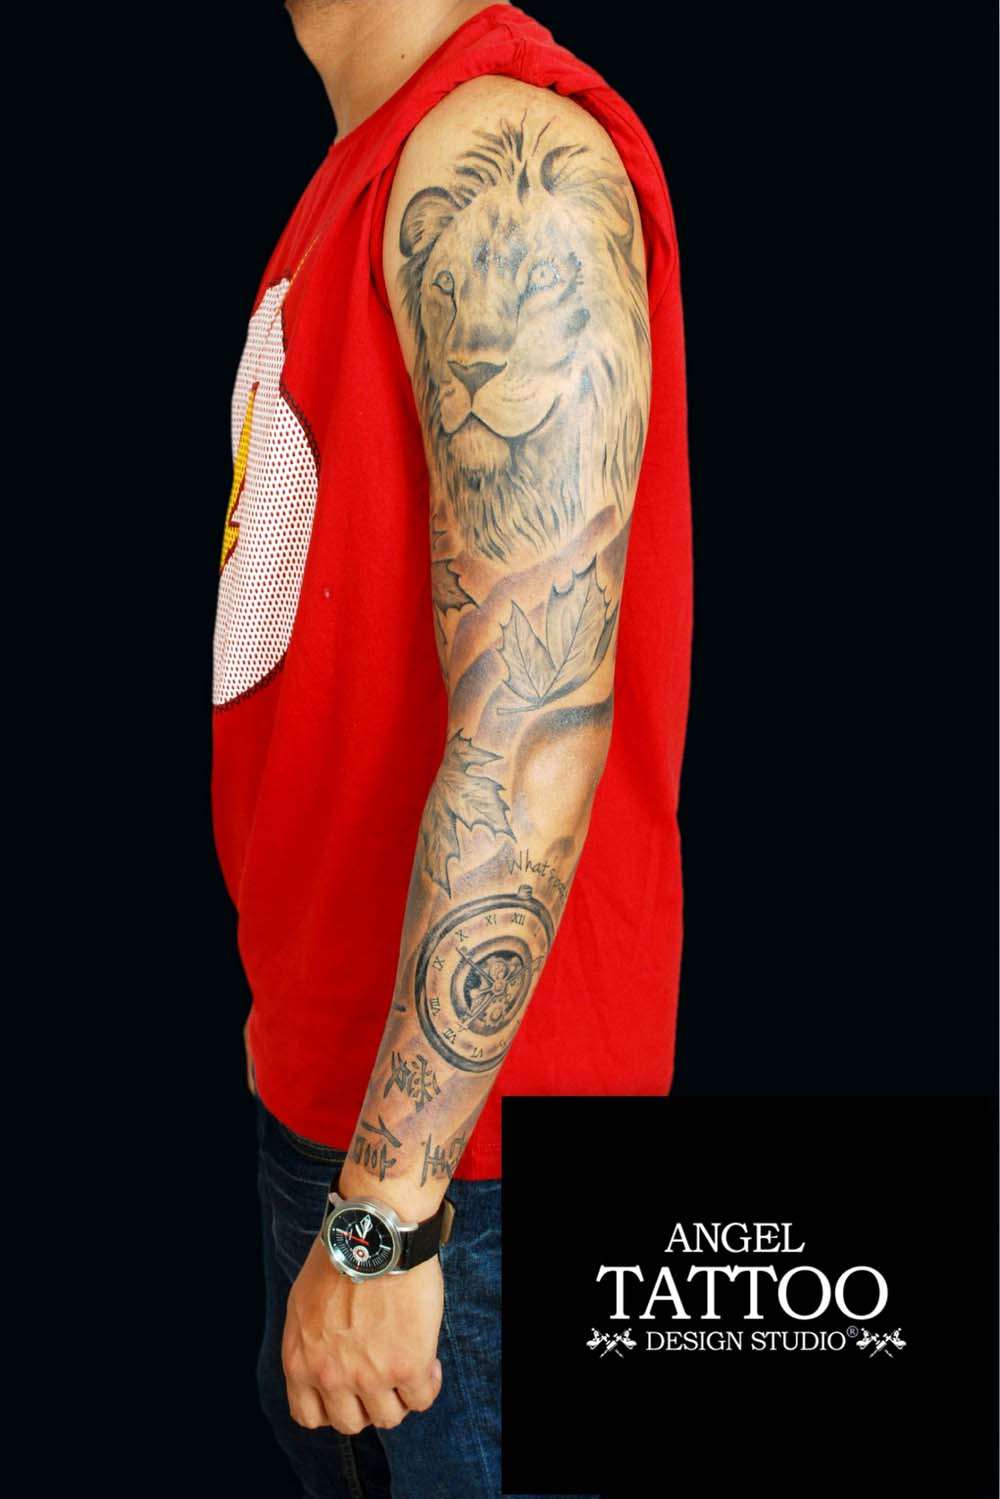 Forearm Sleeve Tattoo Ideas Not To Miss - Tattoo Glee